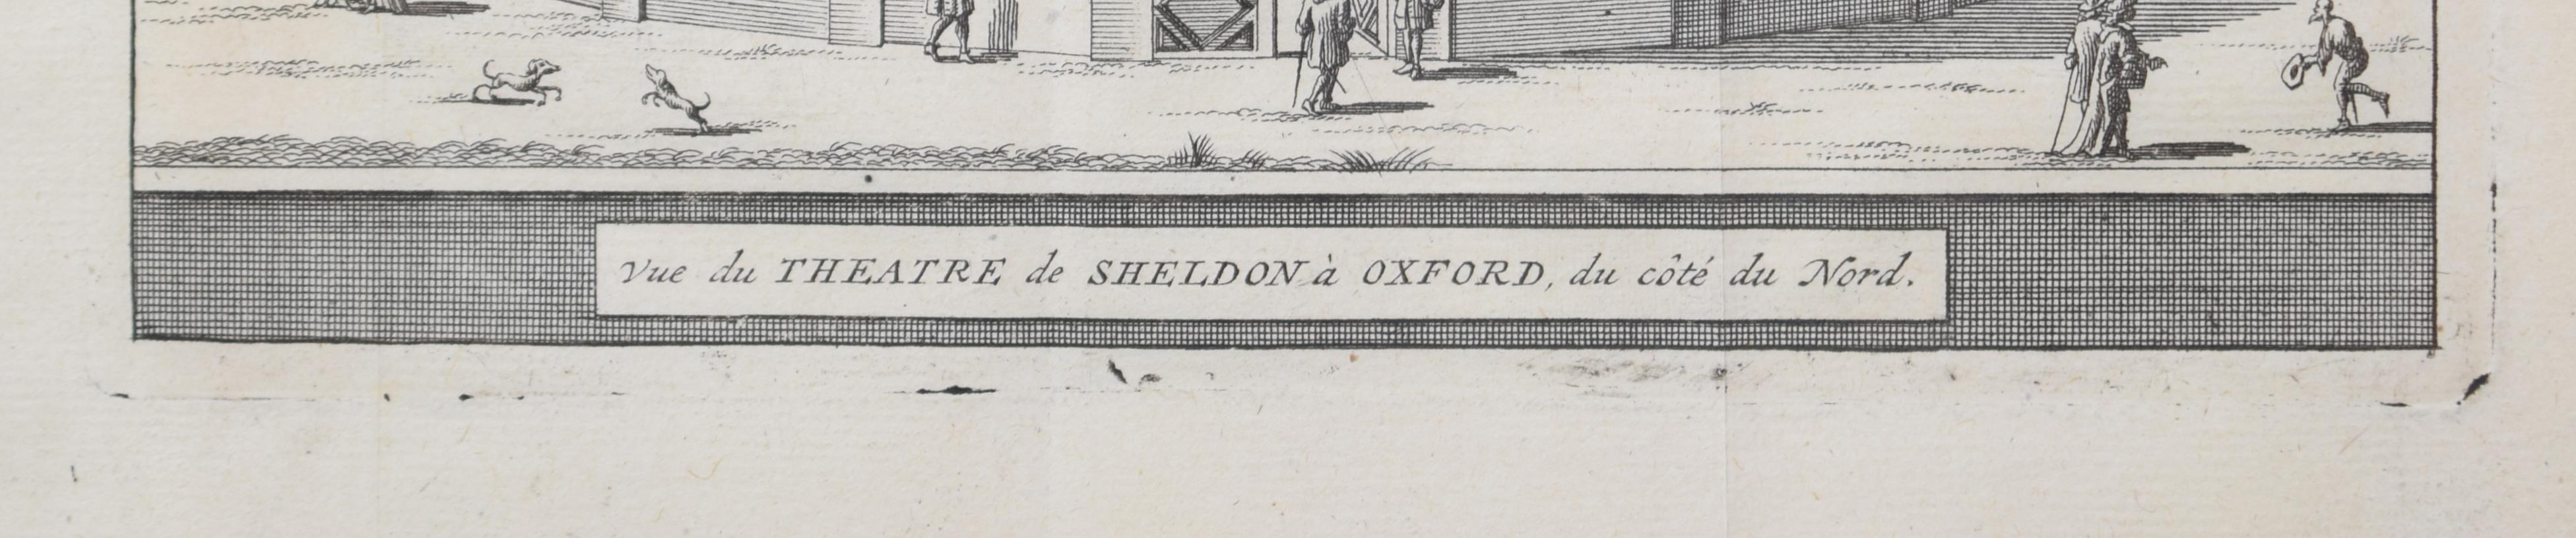 The Sheldonian, Oxford University par Pieter van der Aa d'après David Loggan - Réalisme Print par Pieter Van Der Aa